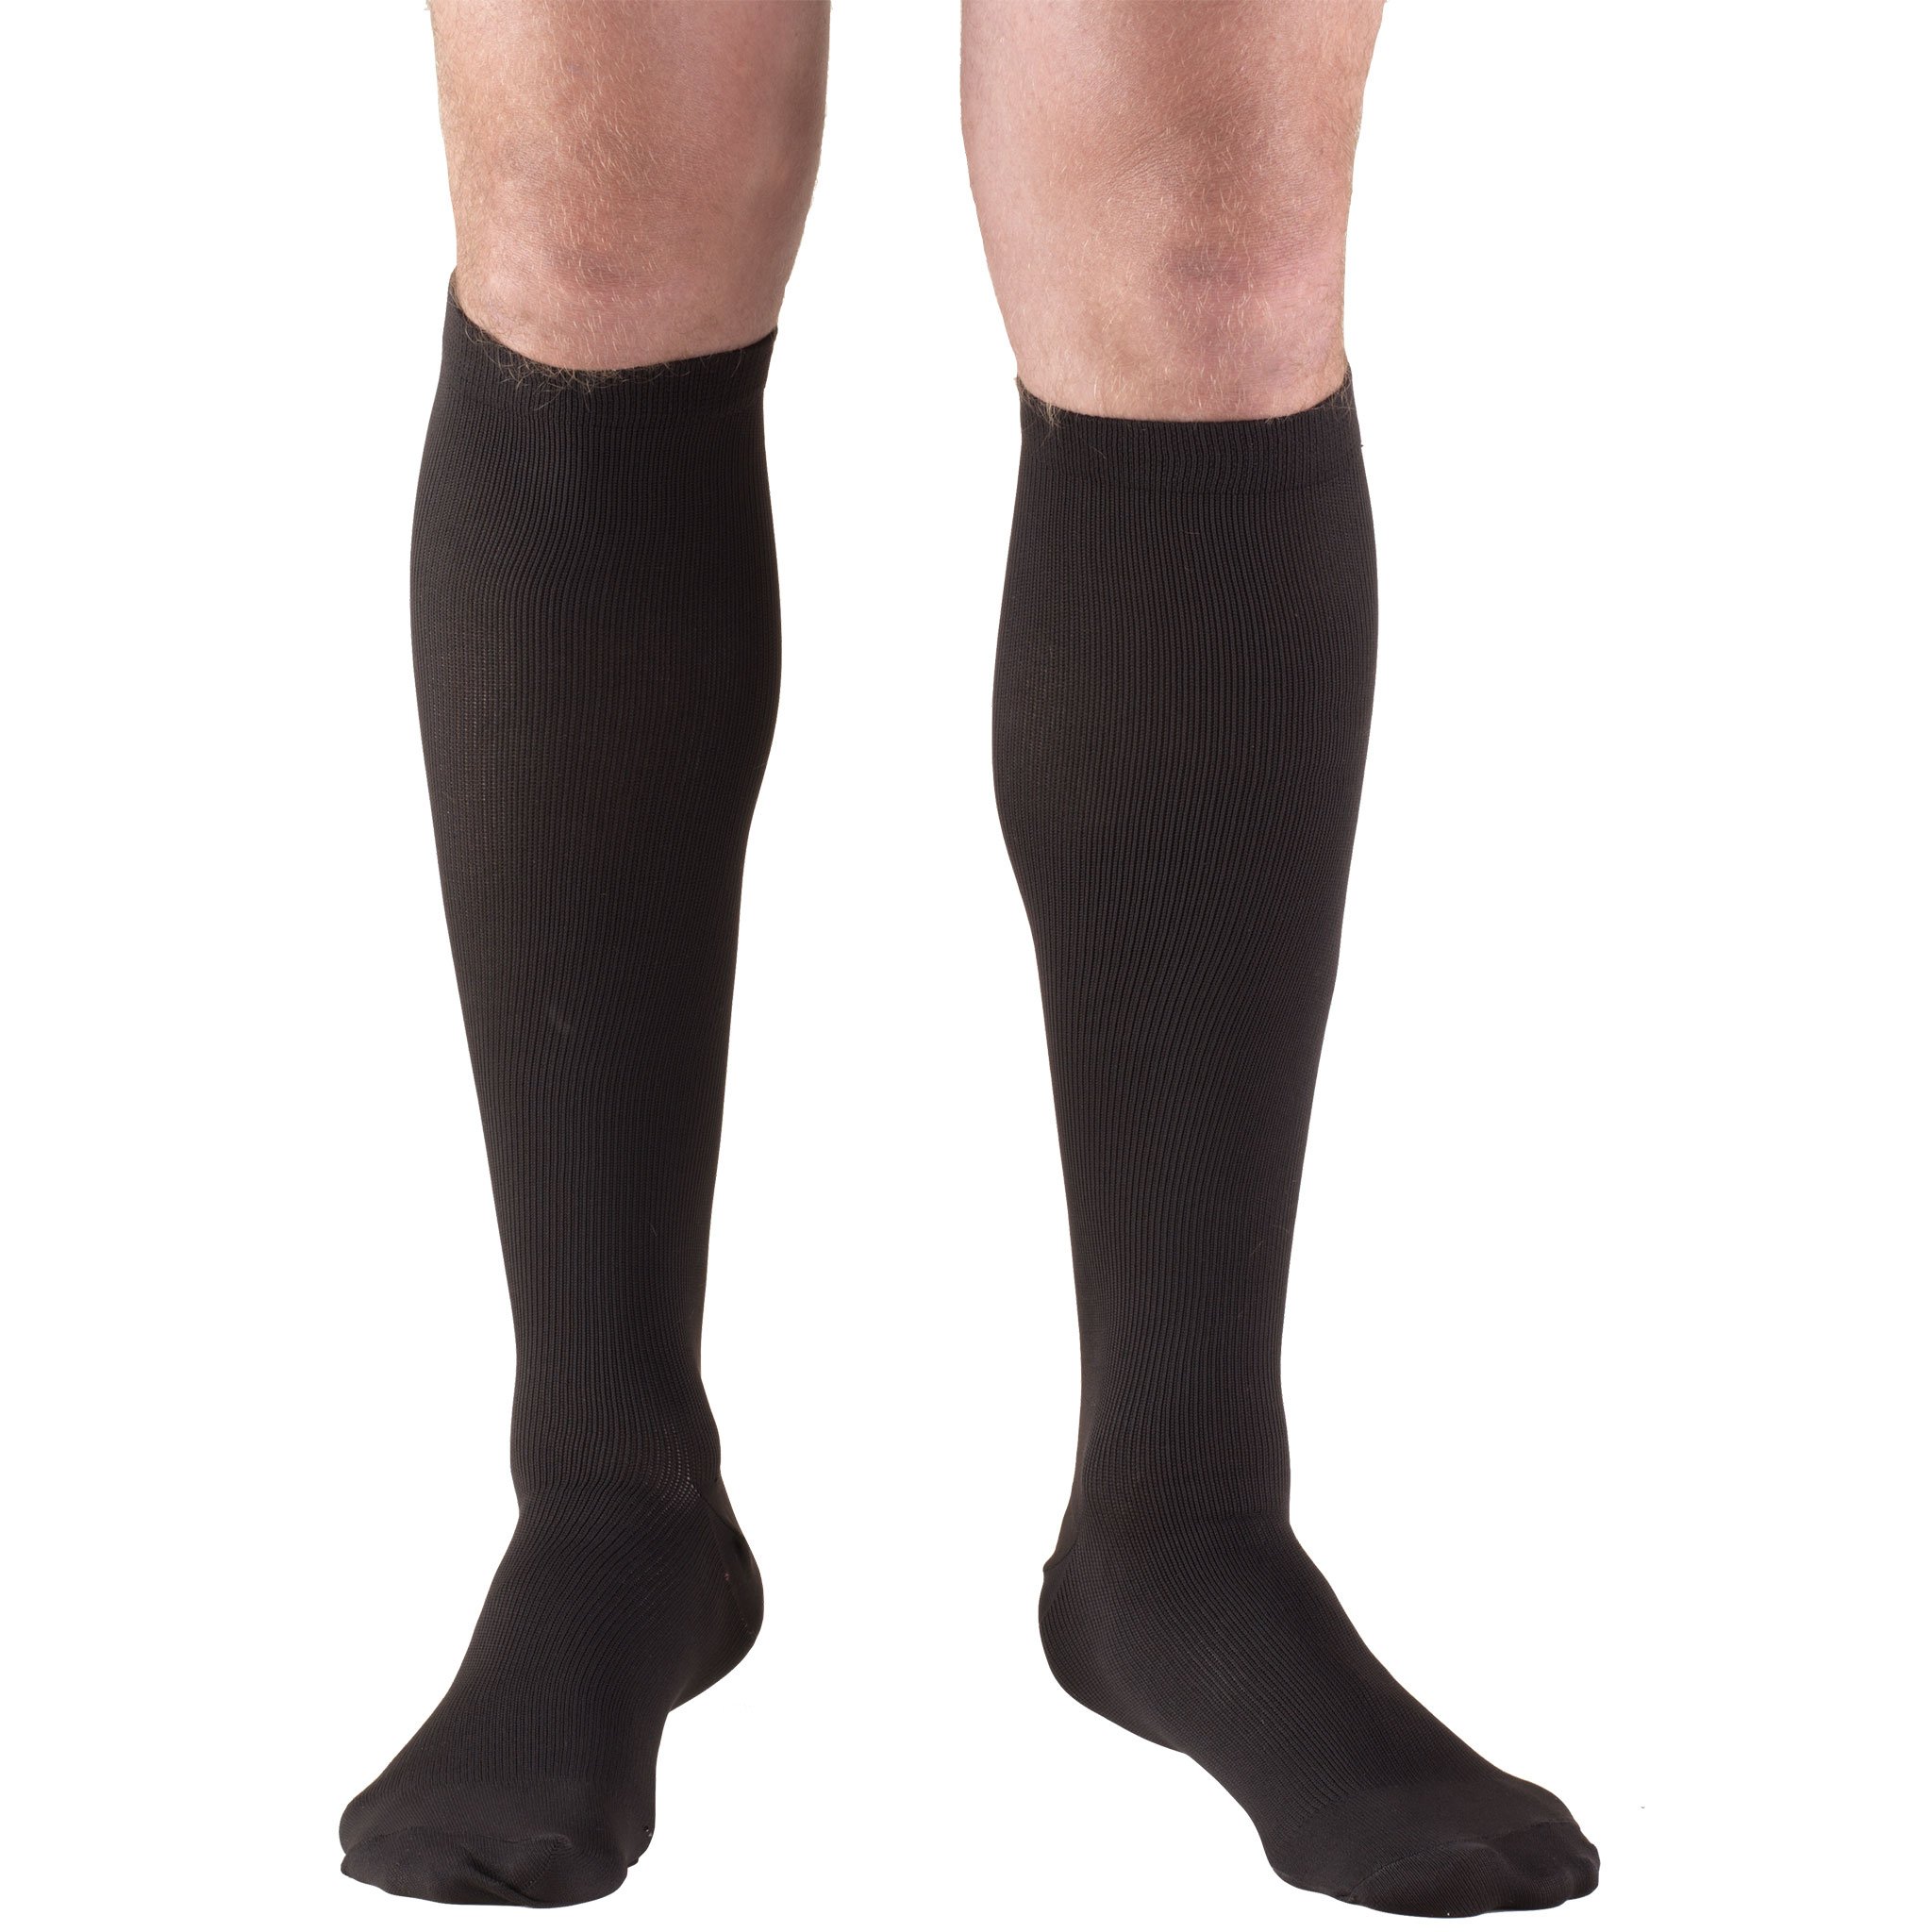 Truform Compression Socks, 20-30 mmHg, Men's Dress Socks, Knee High Over Calf Length, Black, X-Large, 1944BL-XL